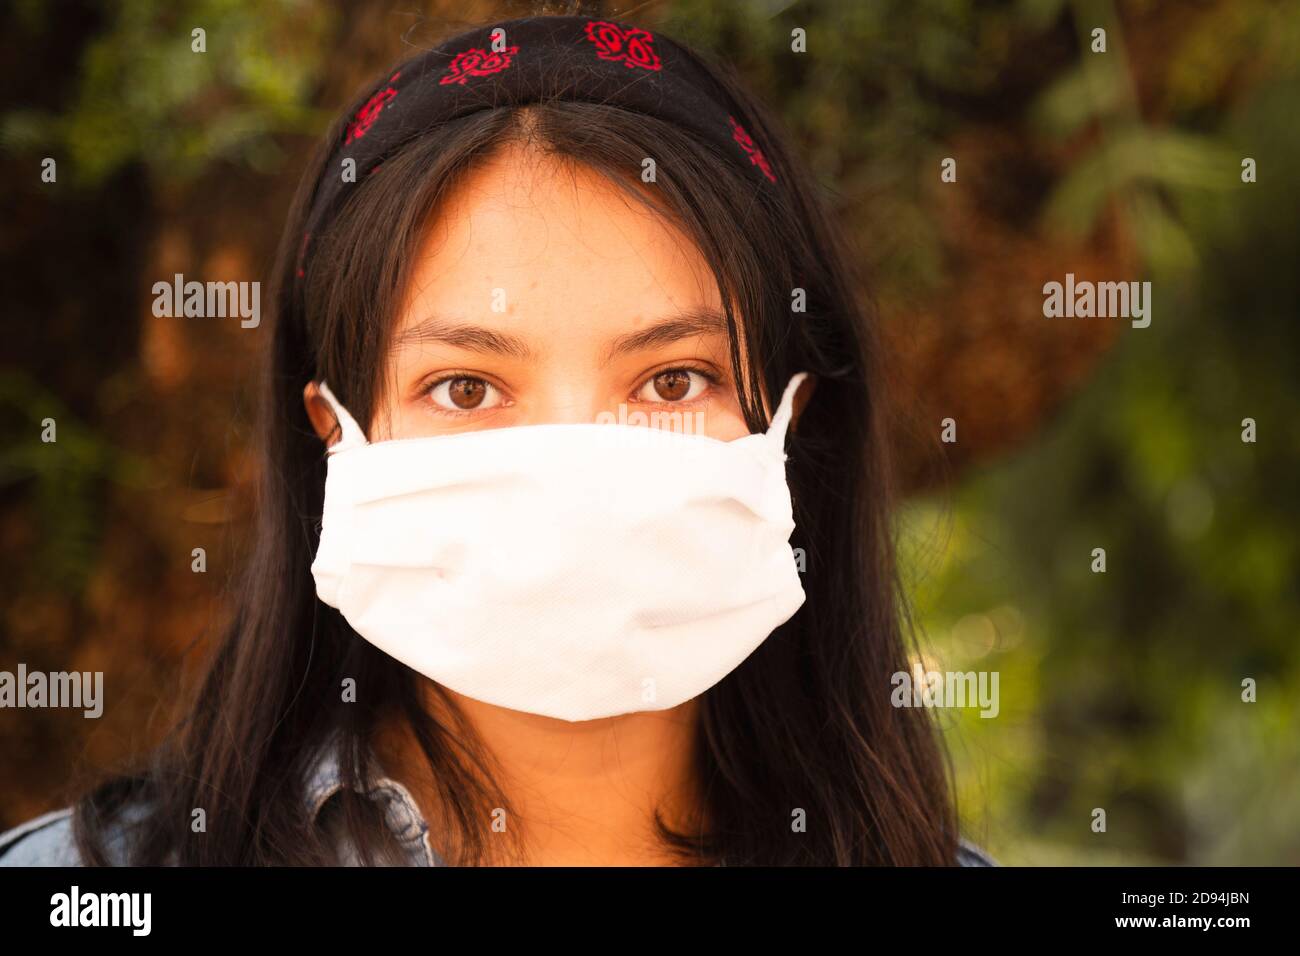 Hispanic woman wearing face mask on street near trees and nature Stock ...